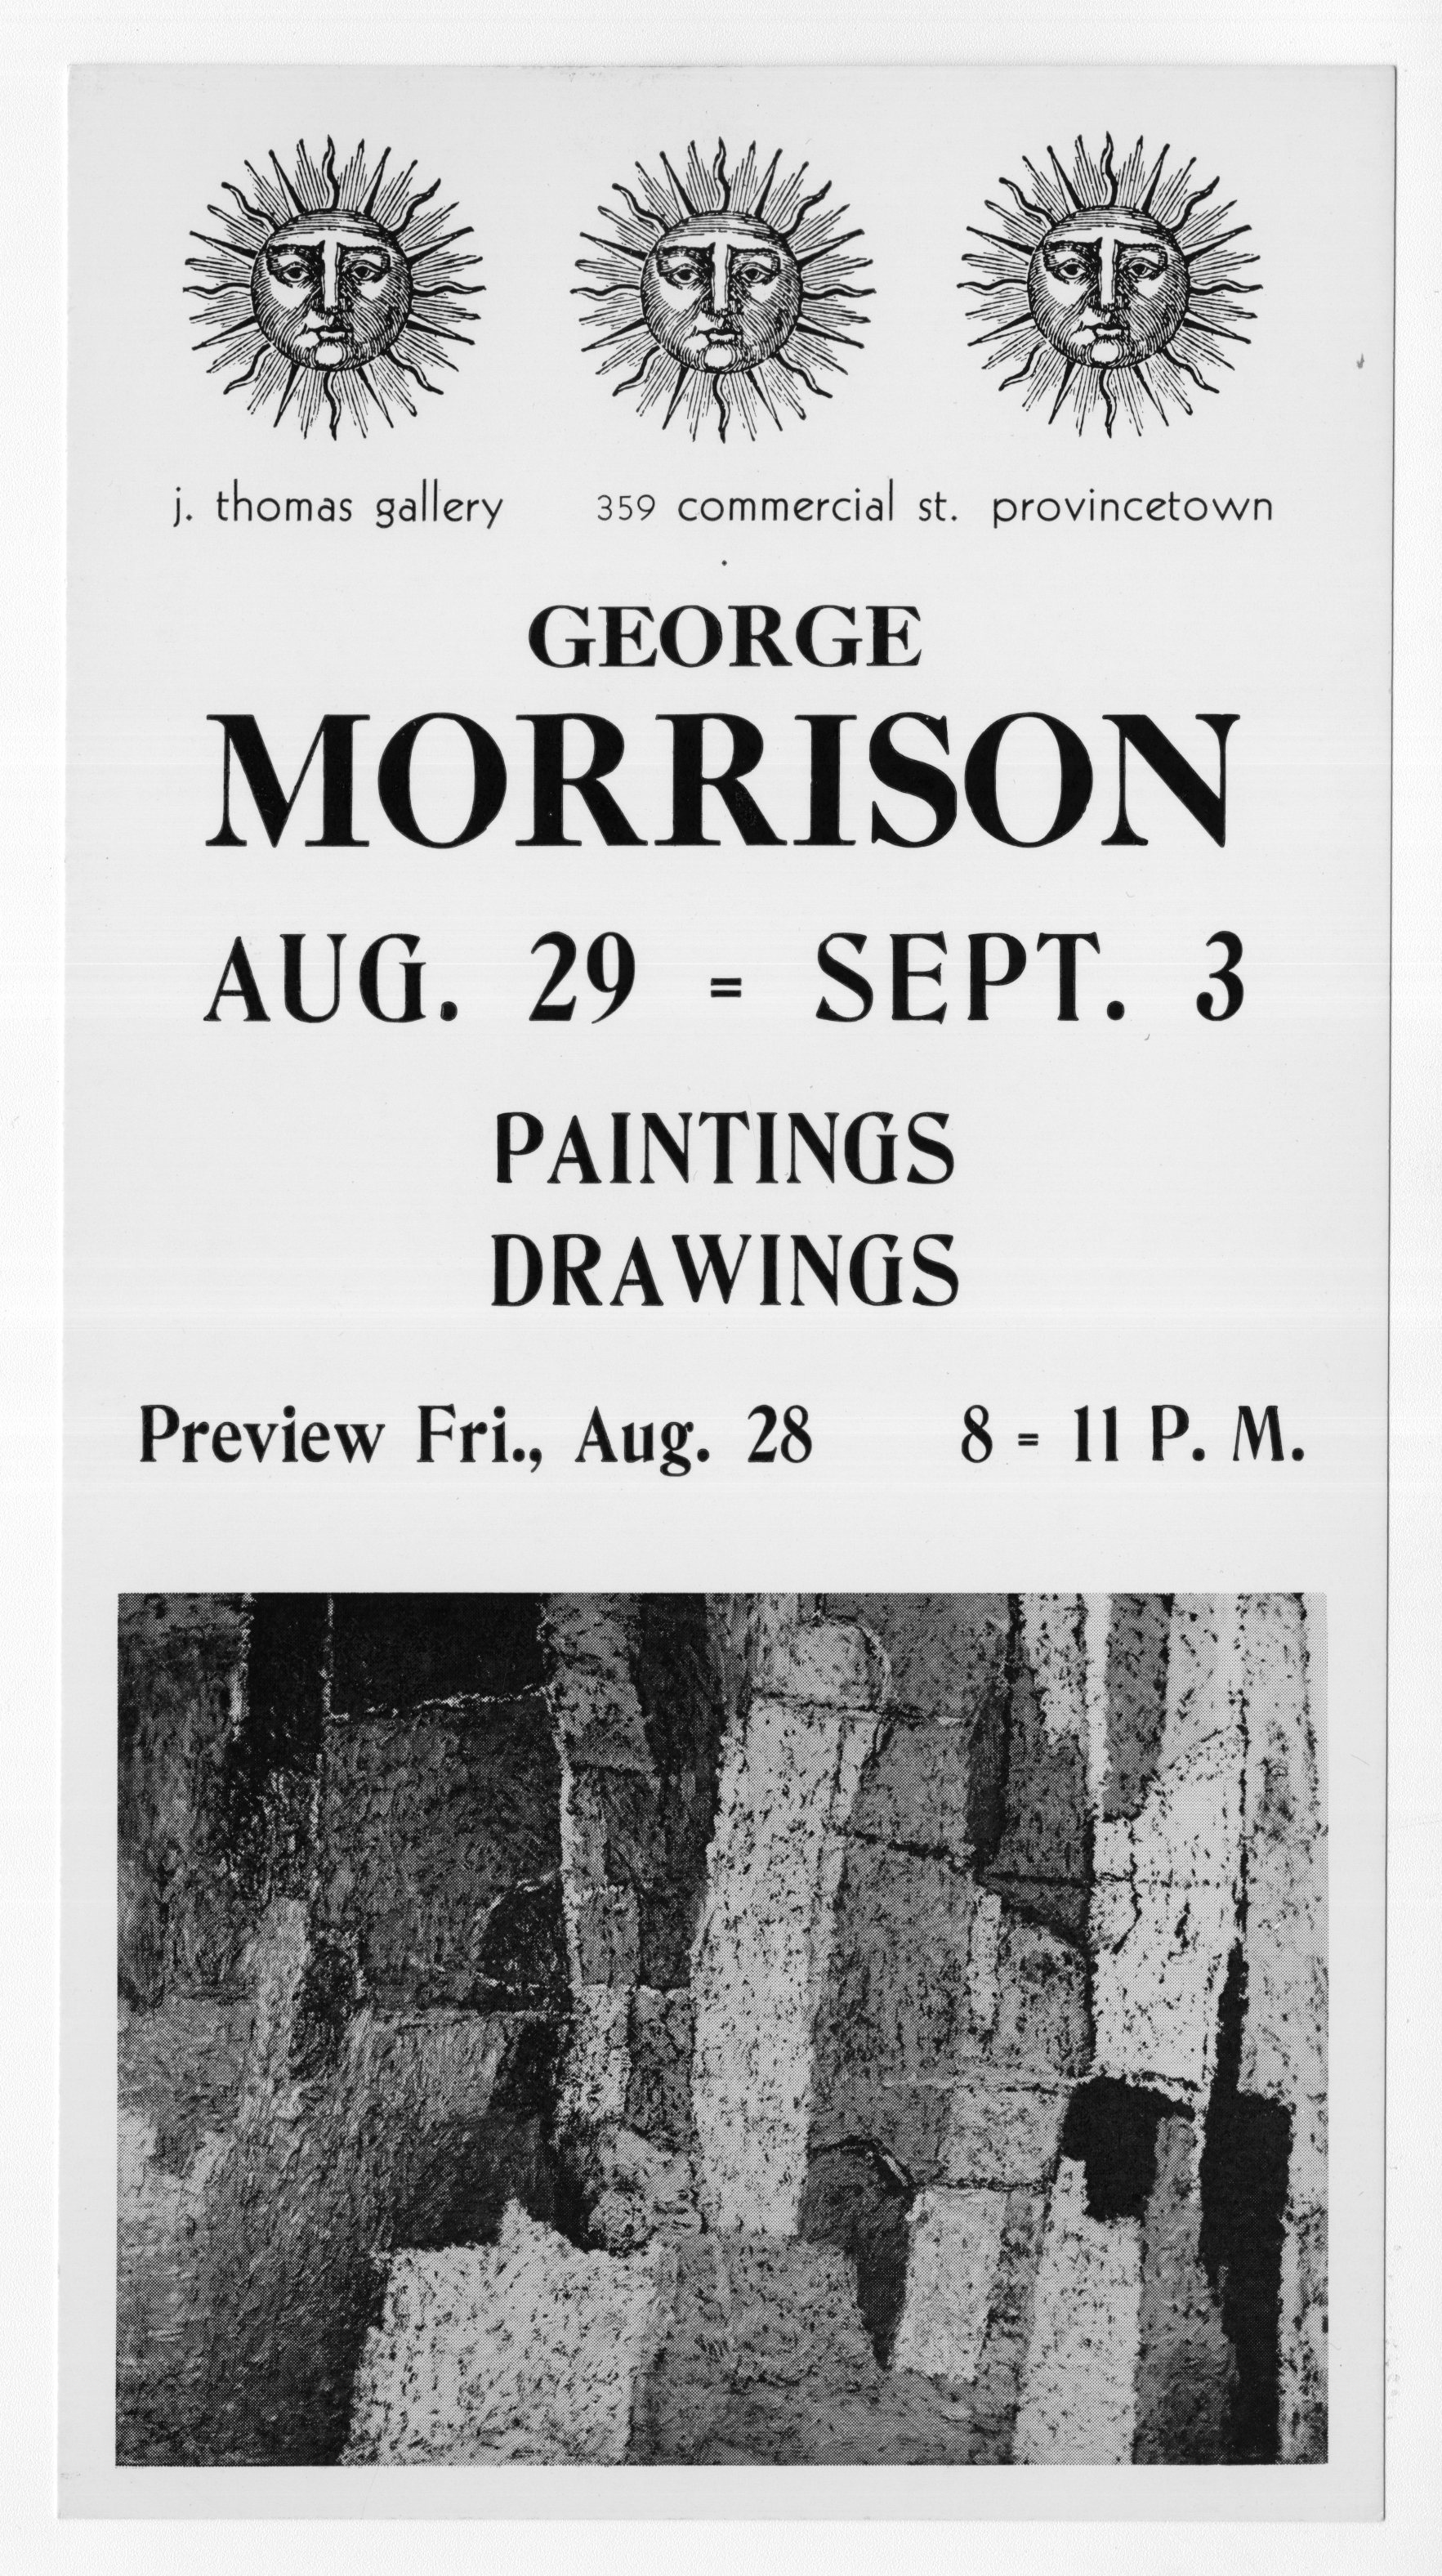 Morrison exhibit invitation_Provincetown, MA, approximately 1964